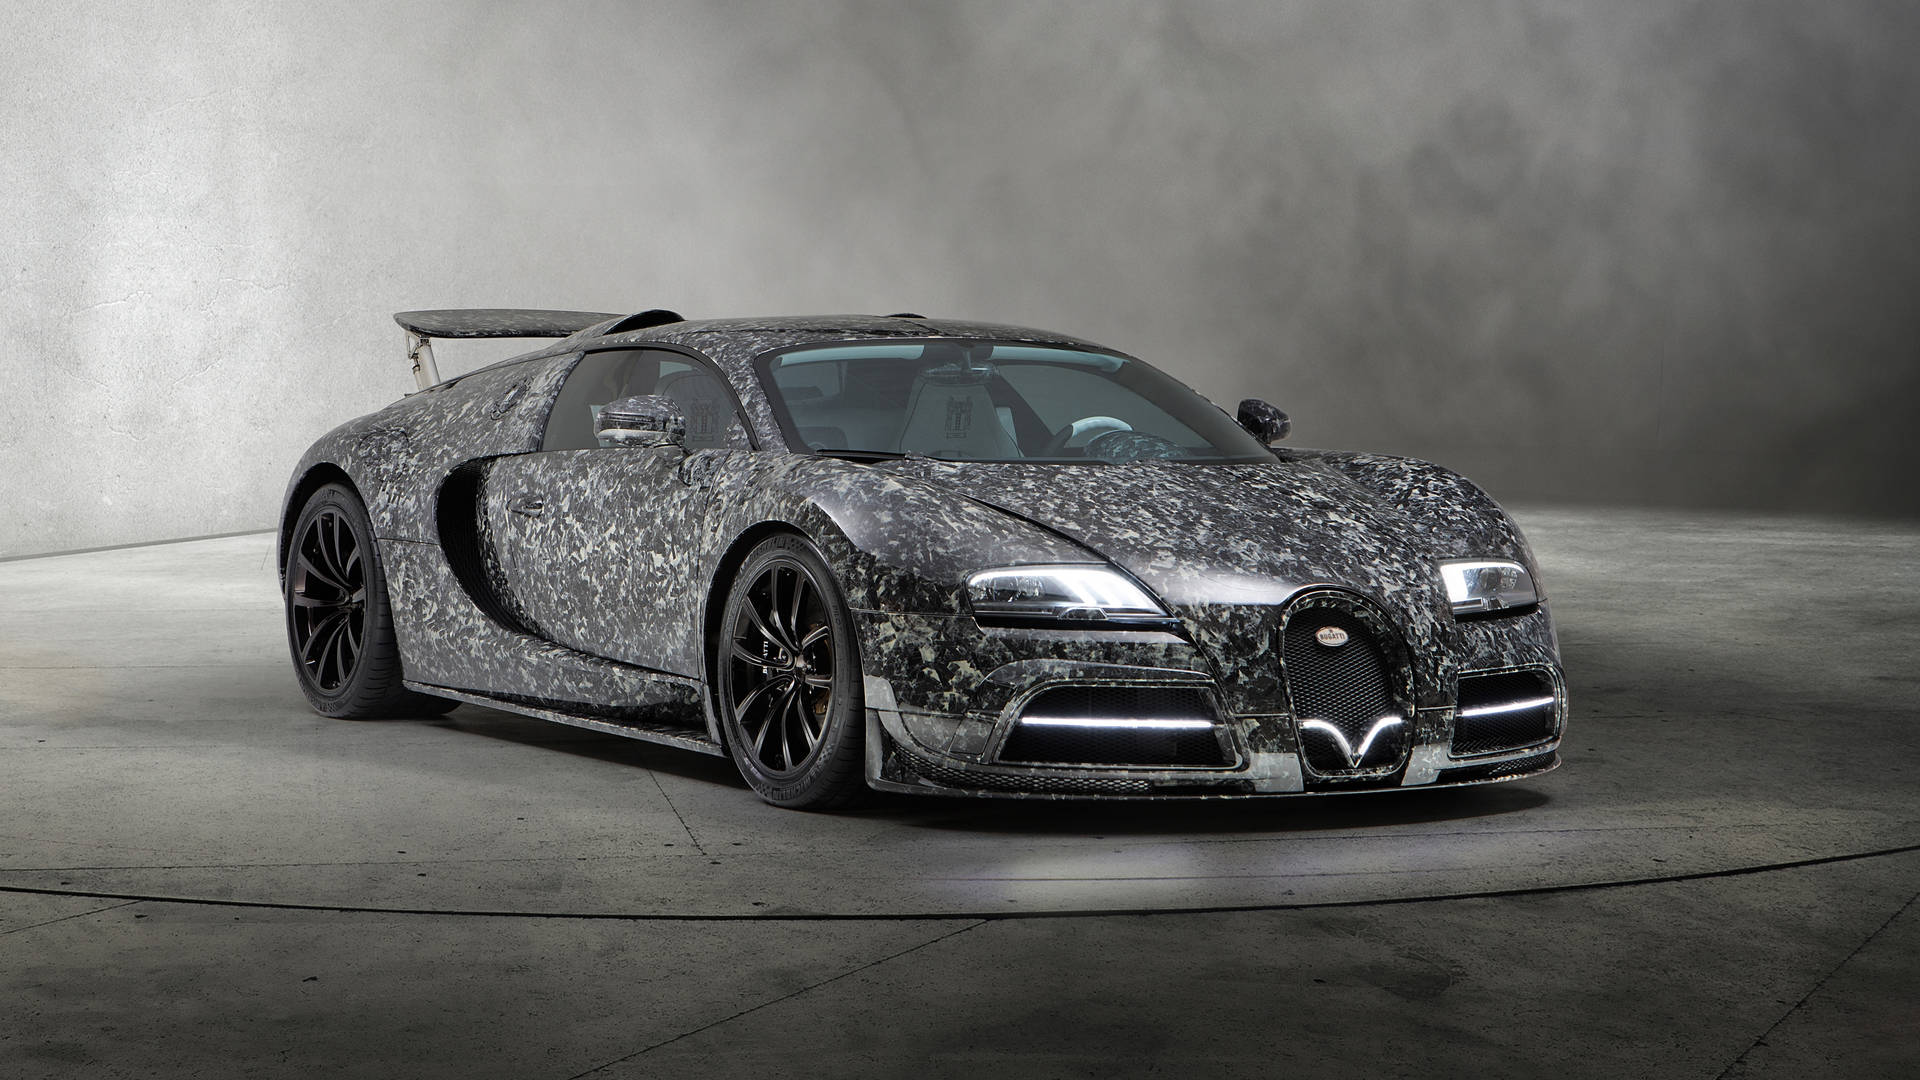 Speckled Cool Bugatti Veyron Background